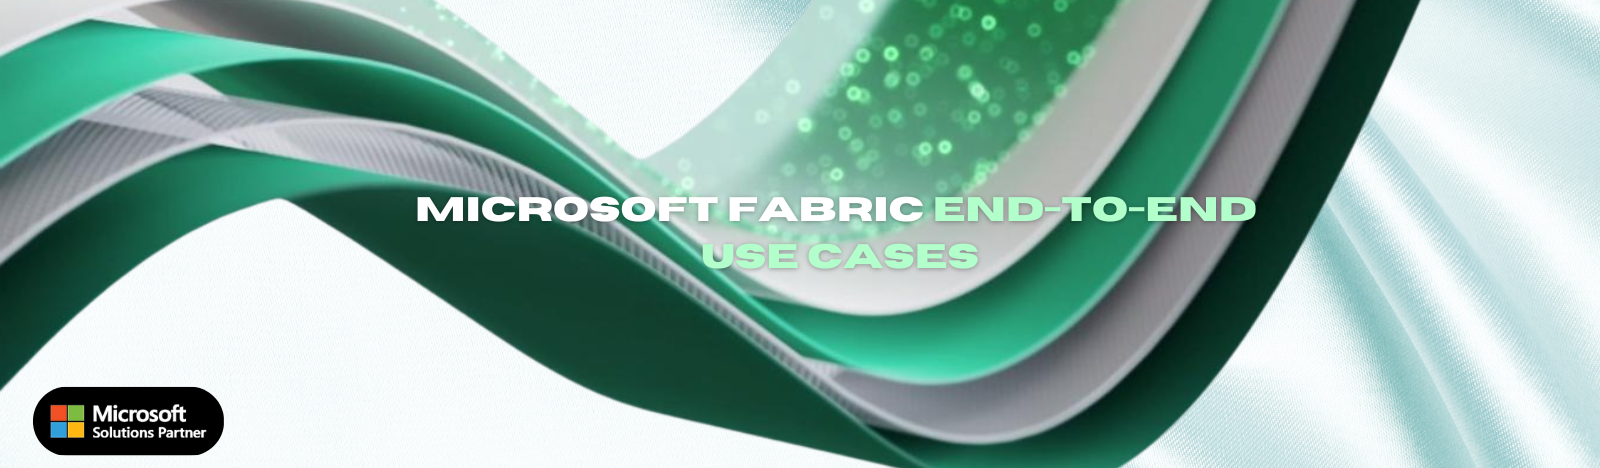 Microsoft Fabric Use Cases